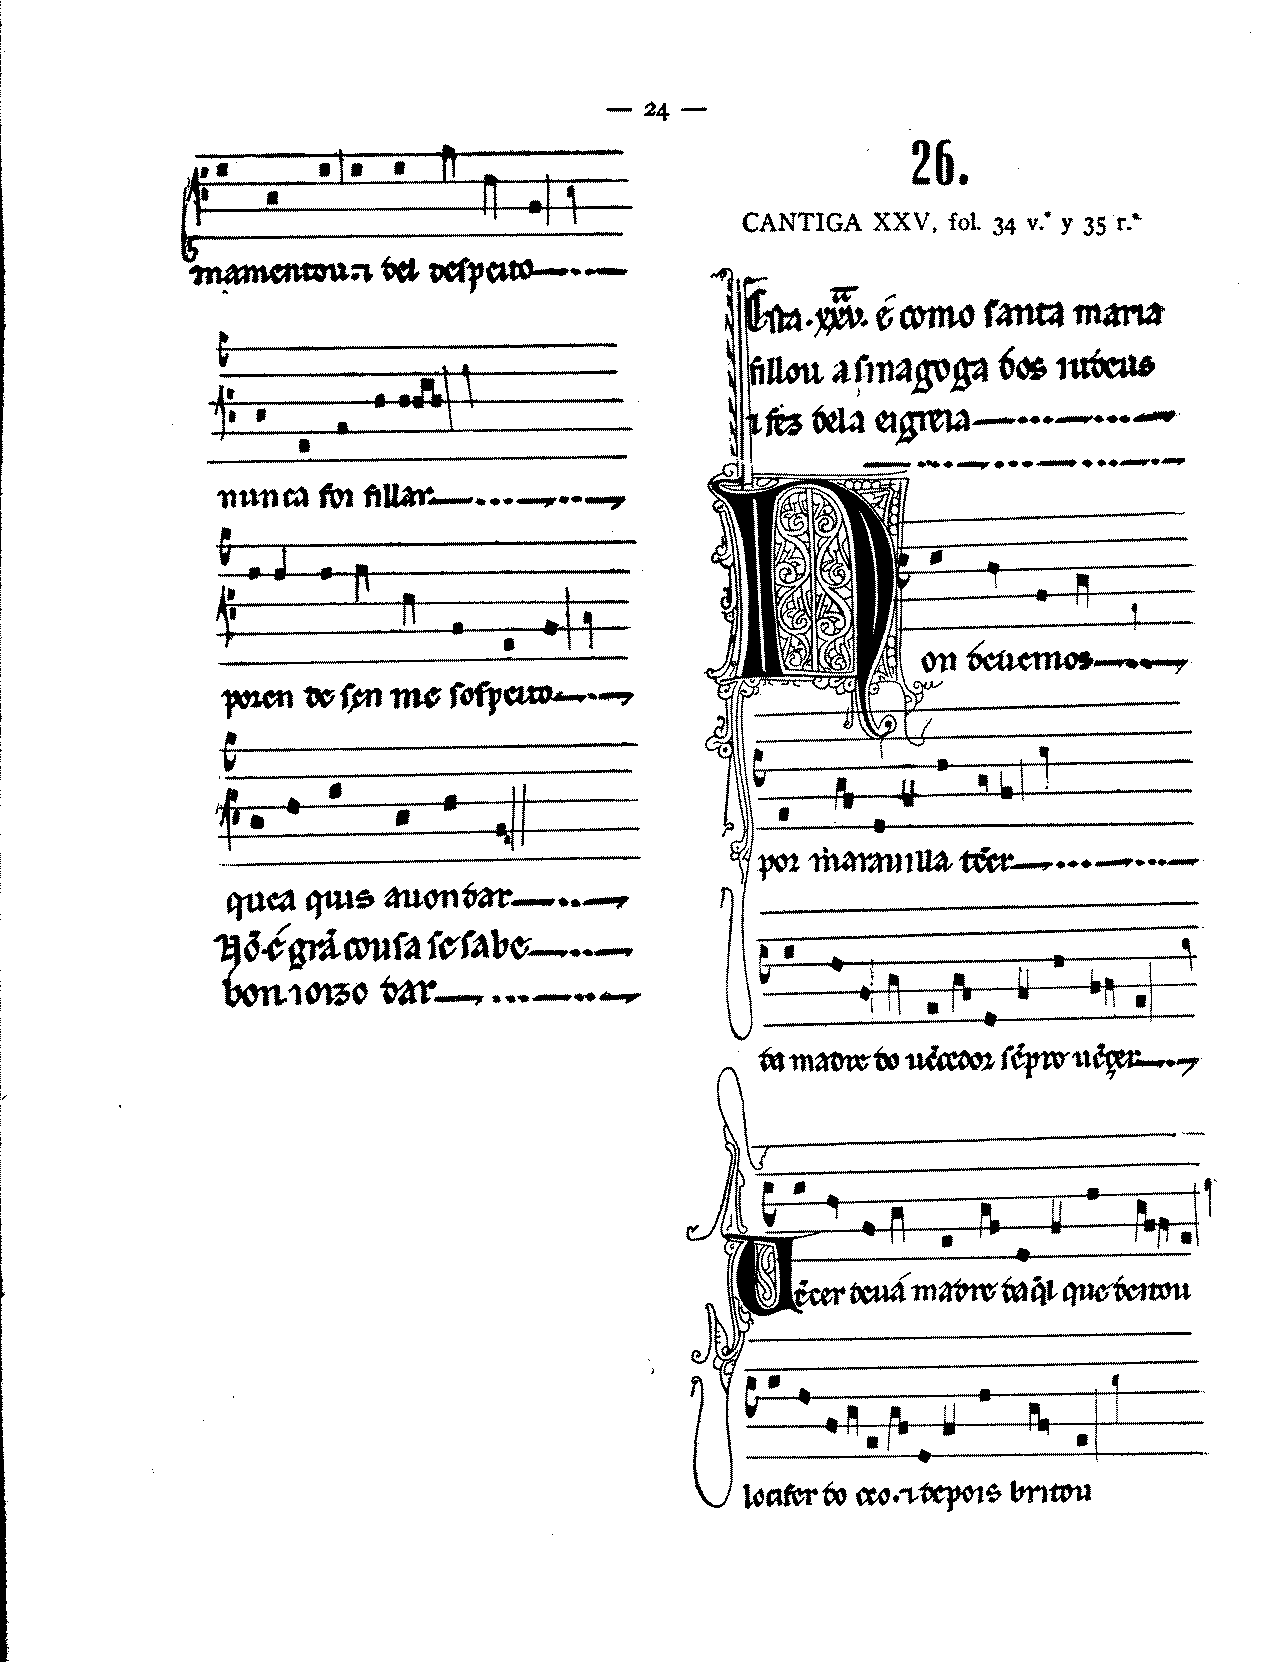 File:Las visperas sicilianas (IA lasvisperassicil09belm).pdf